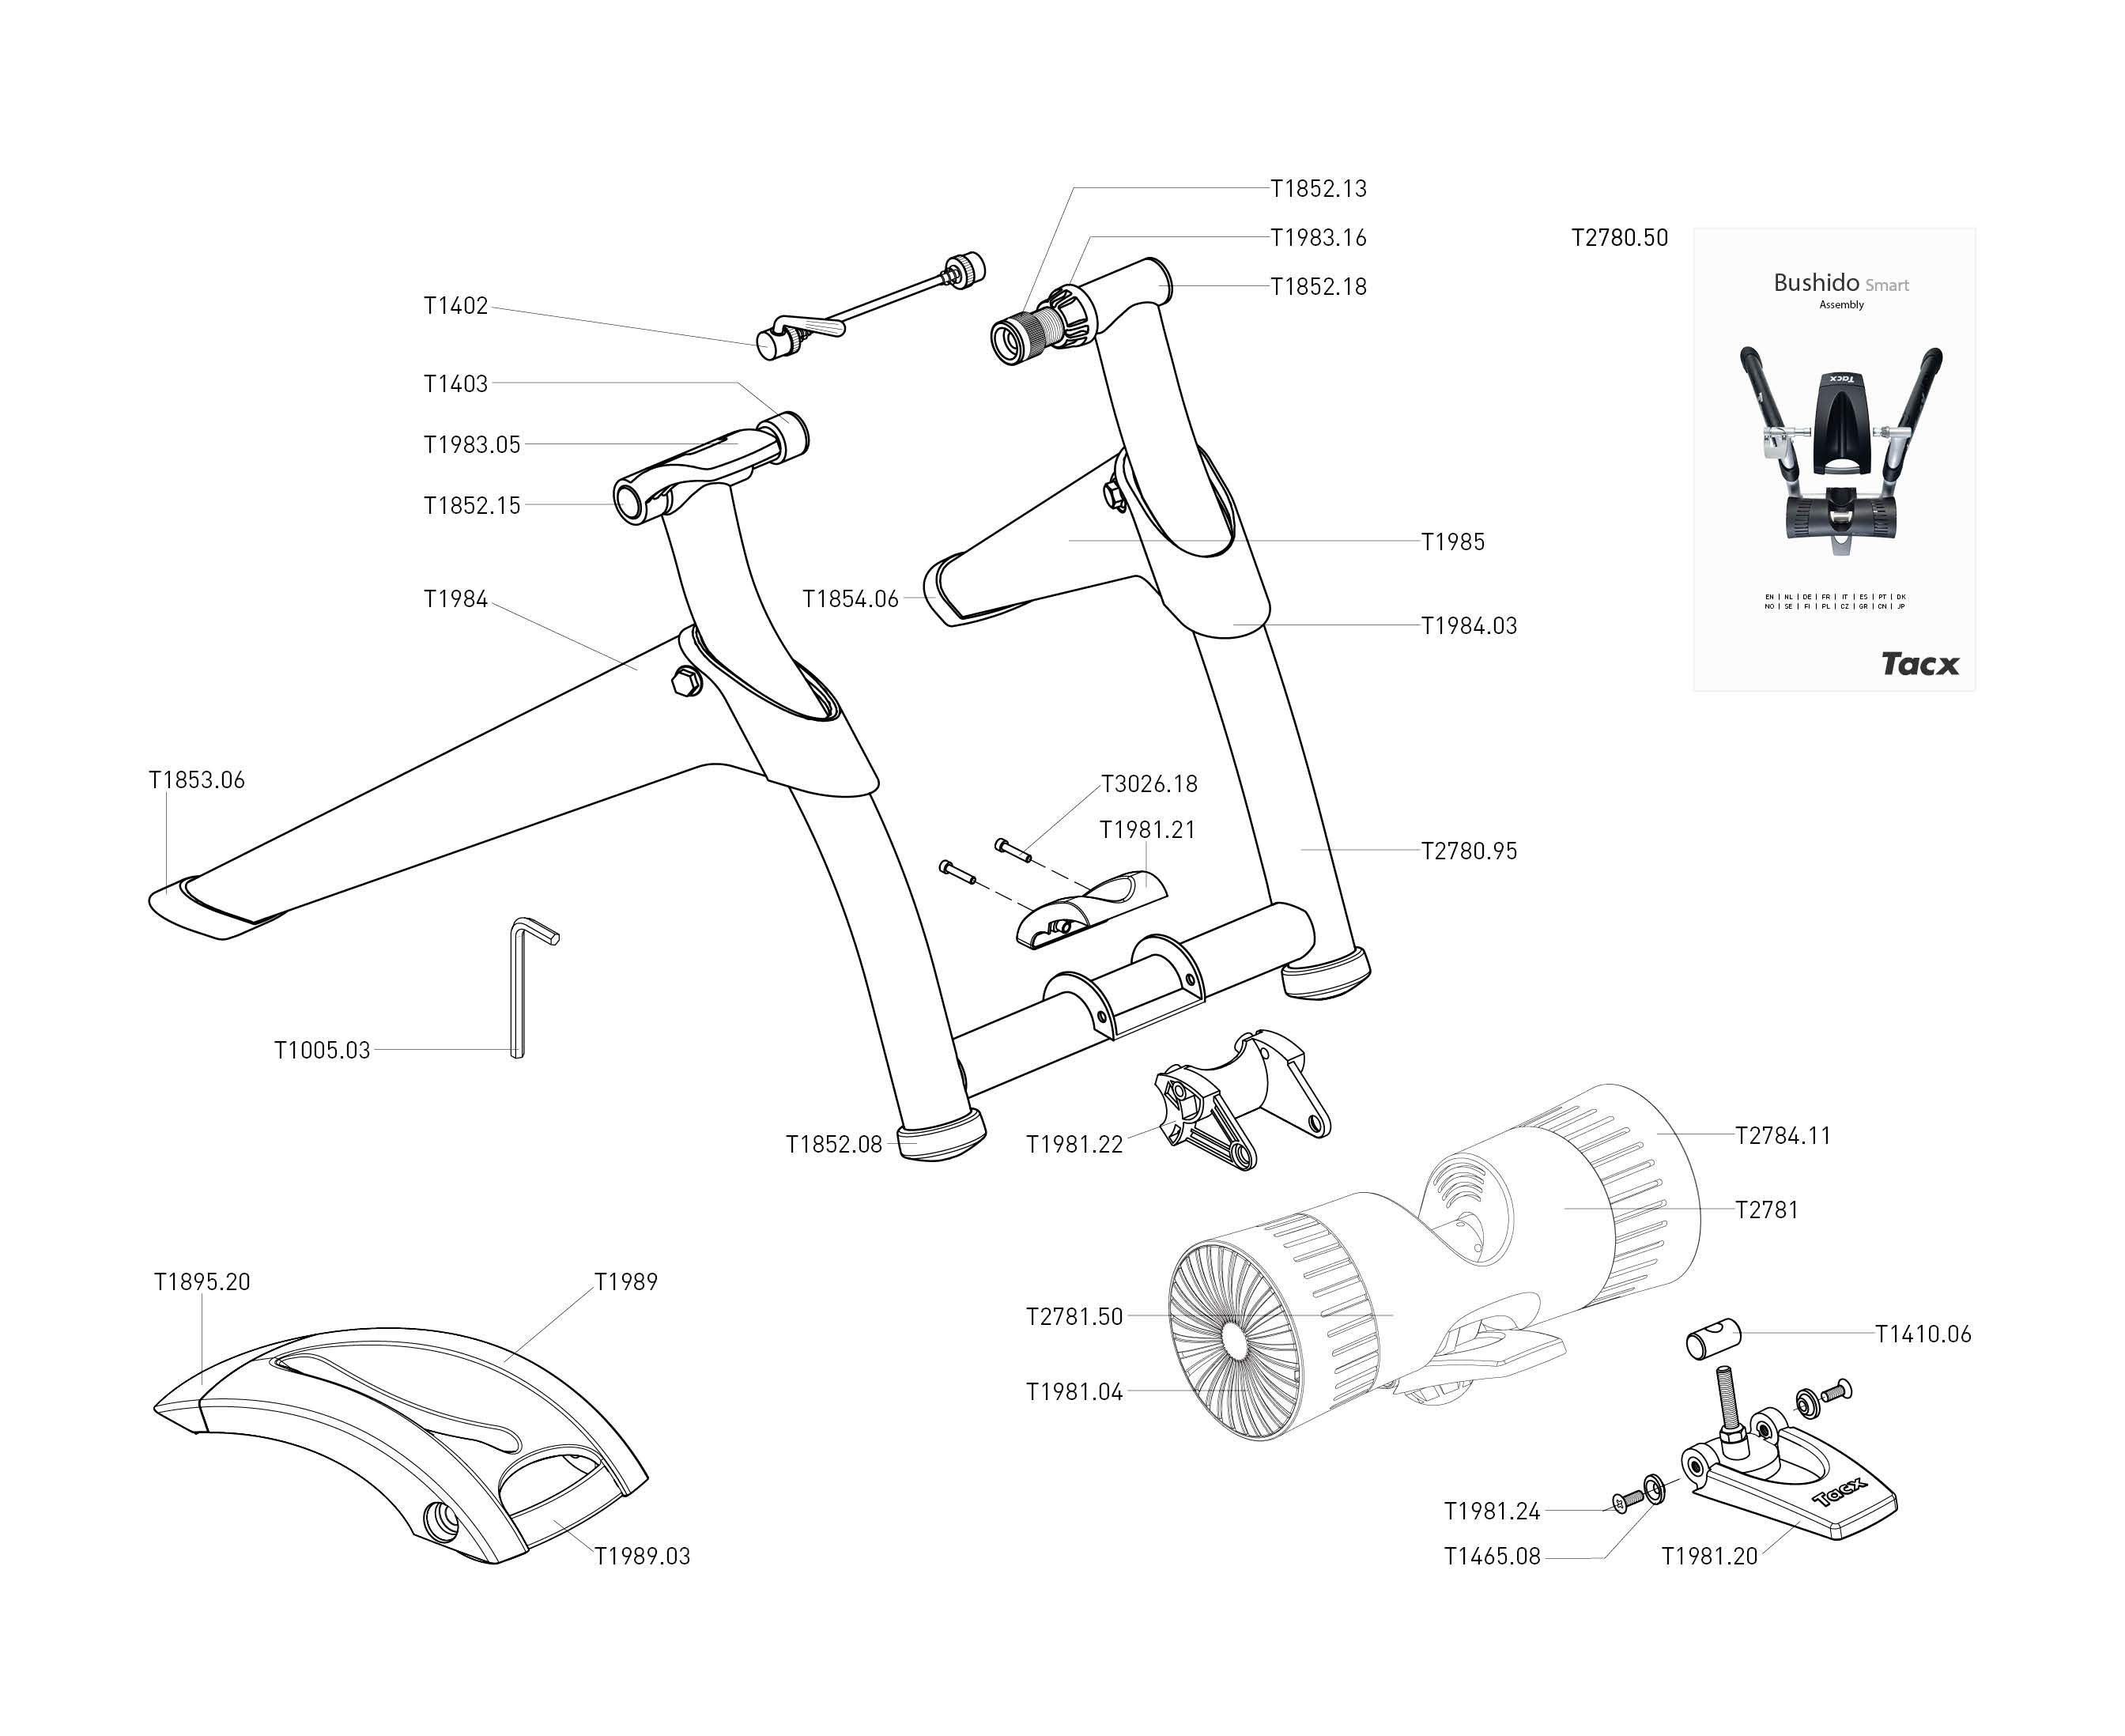 Spare Parts Diagram for the Bushido Smart Trainer | Garmin